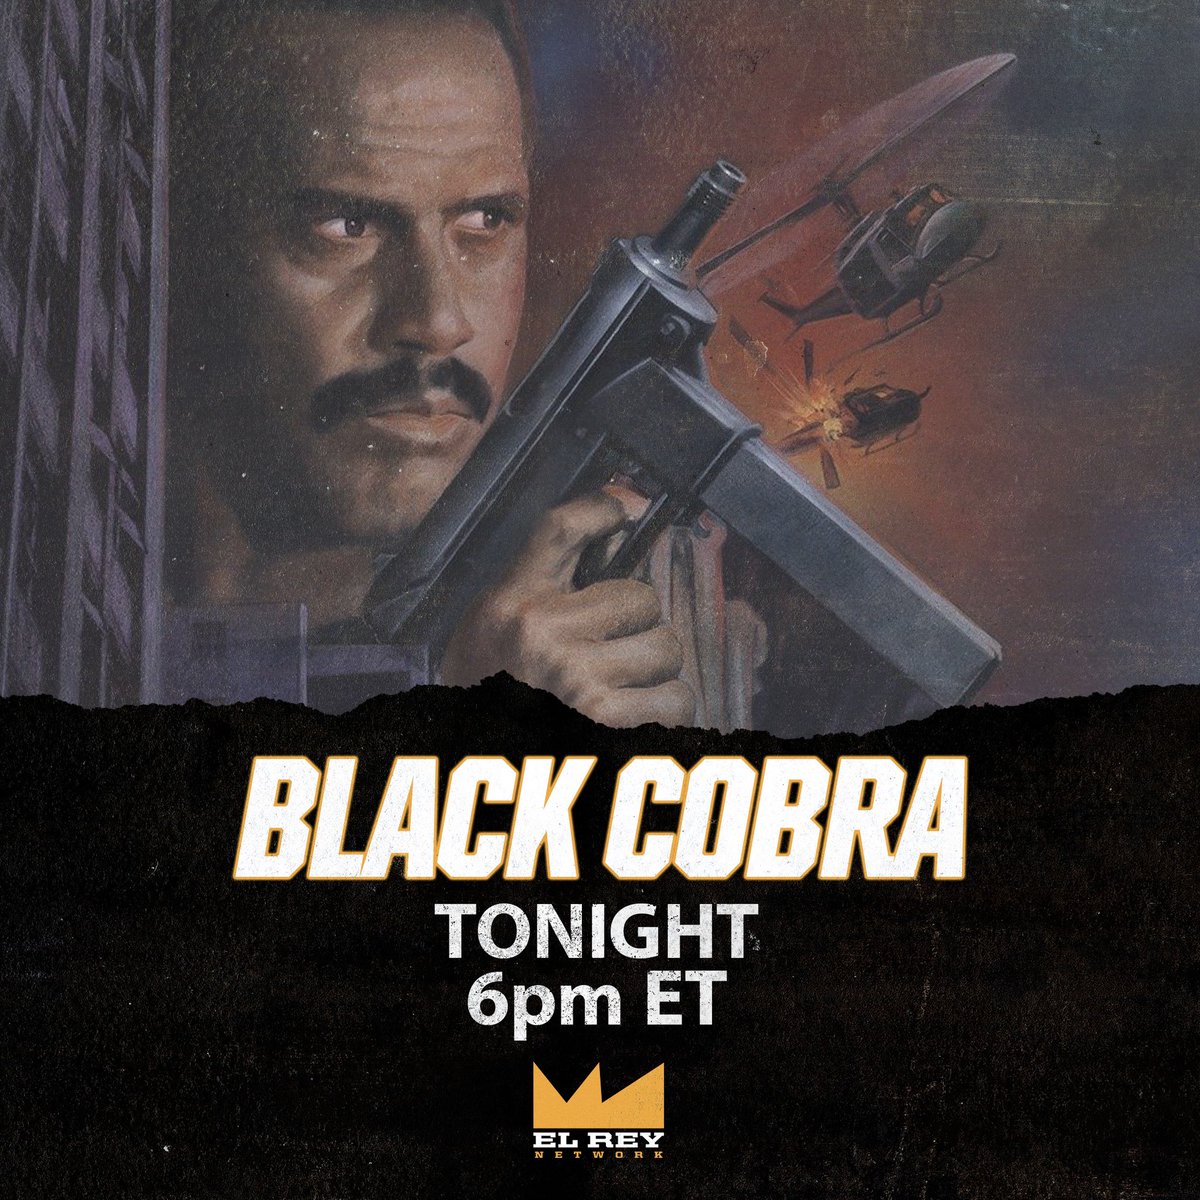 Tonight at 6pm ET catch Black Cobra followed by Black Cobra 2, tune in on #ElReyNetwork!